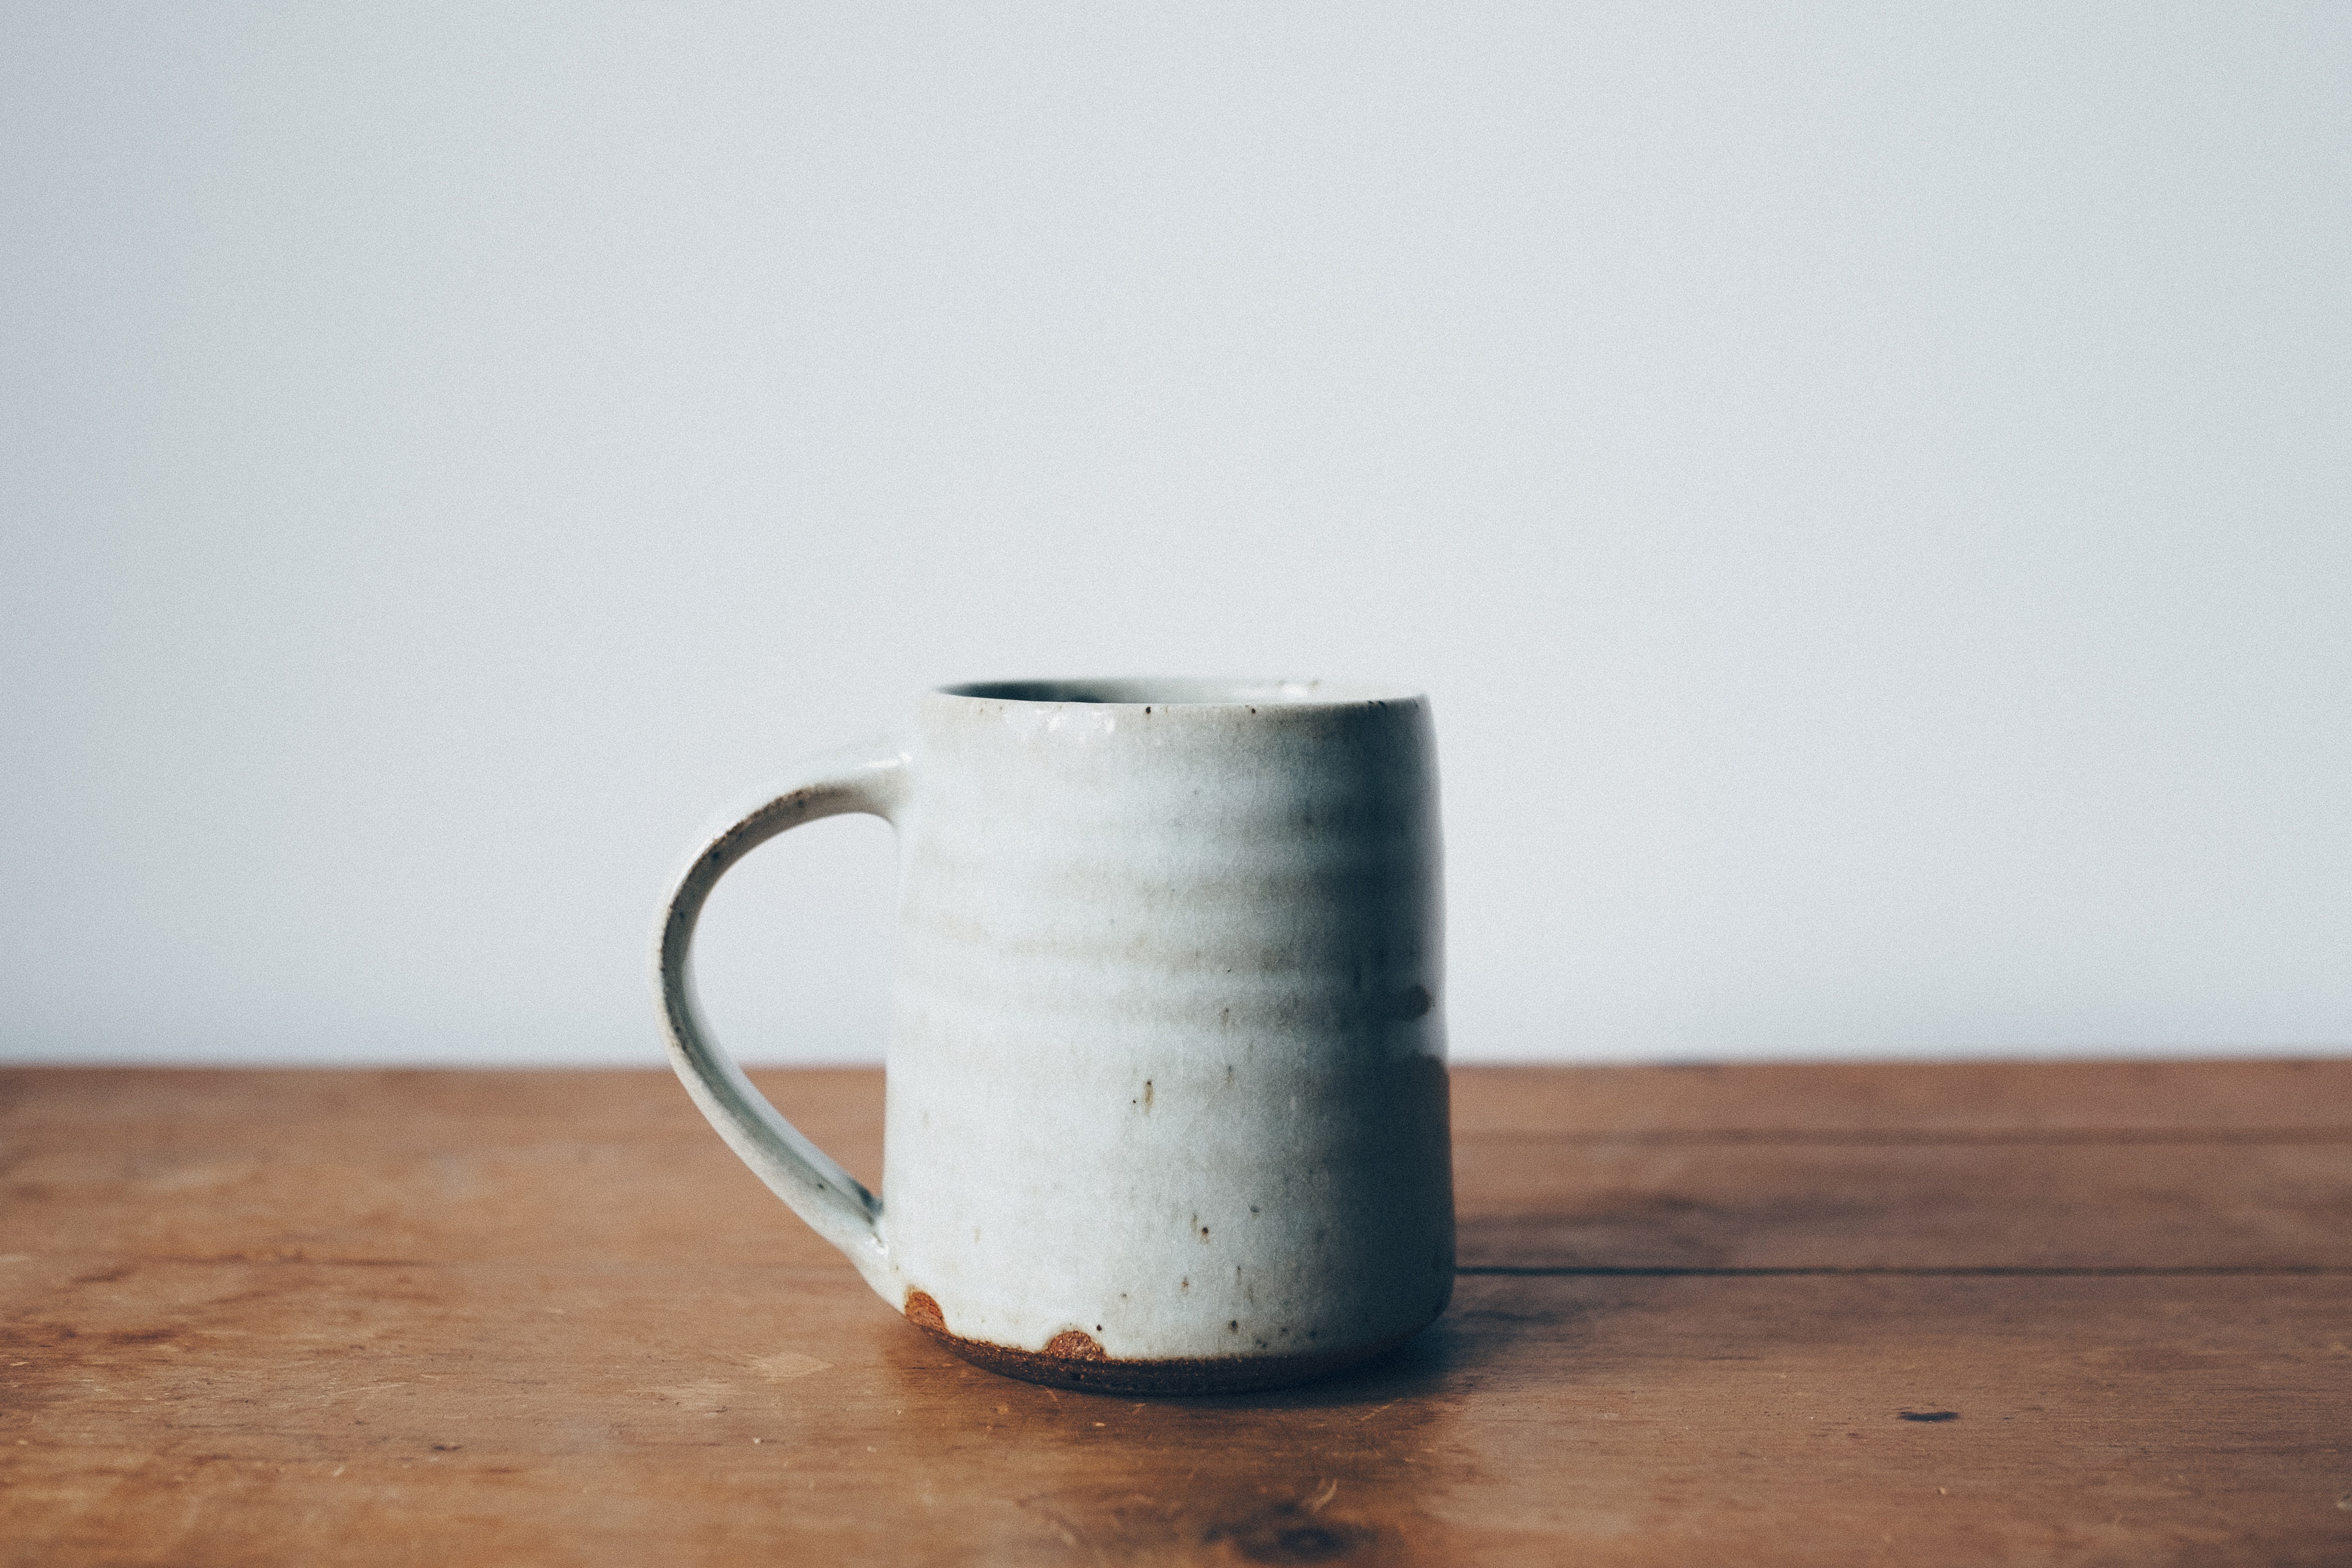 Rustic Coffee Mug on Wooden Table Free Stock Photo ISO